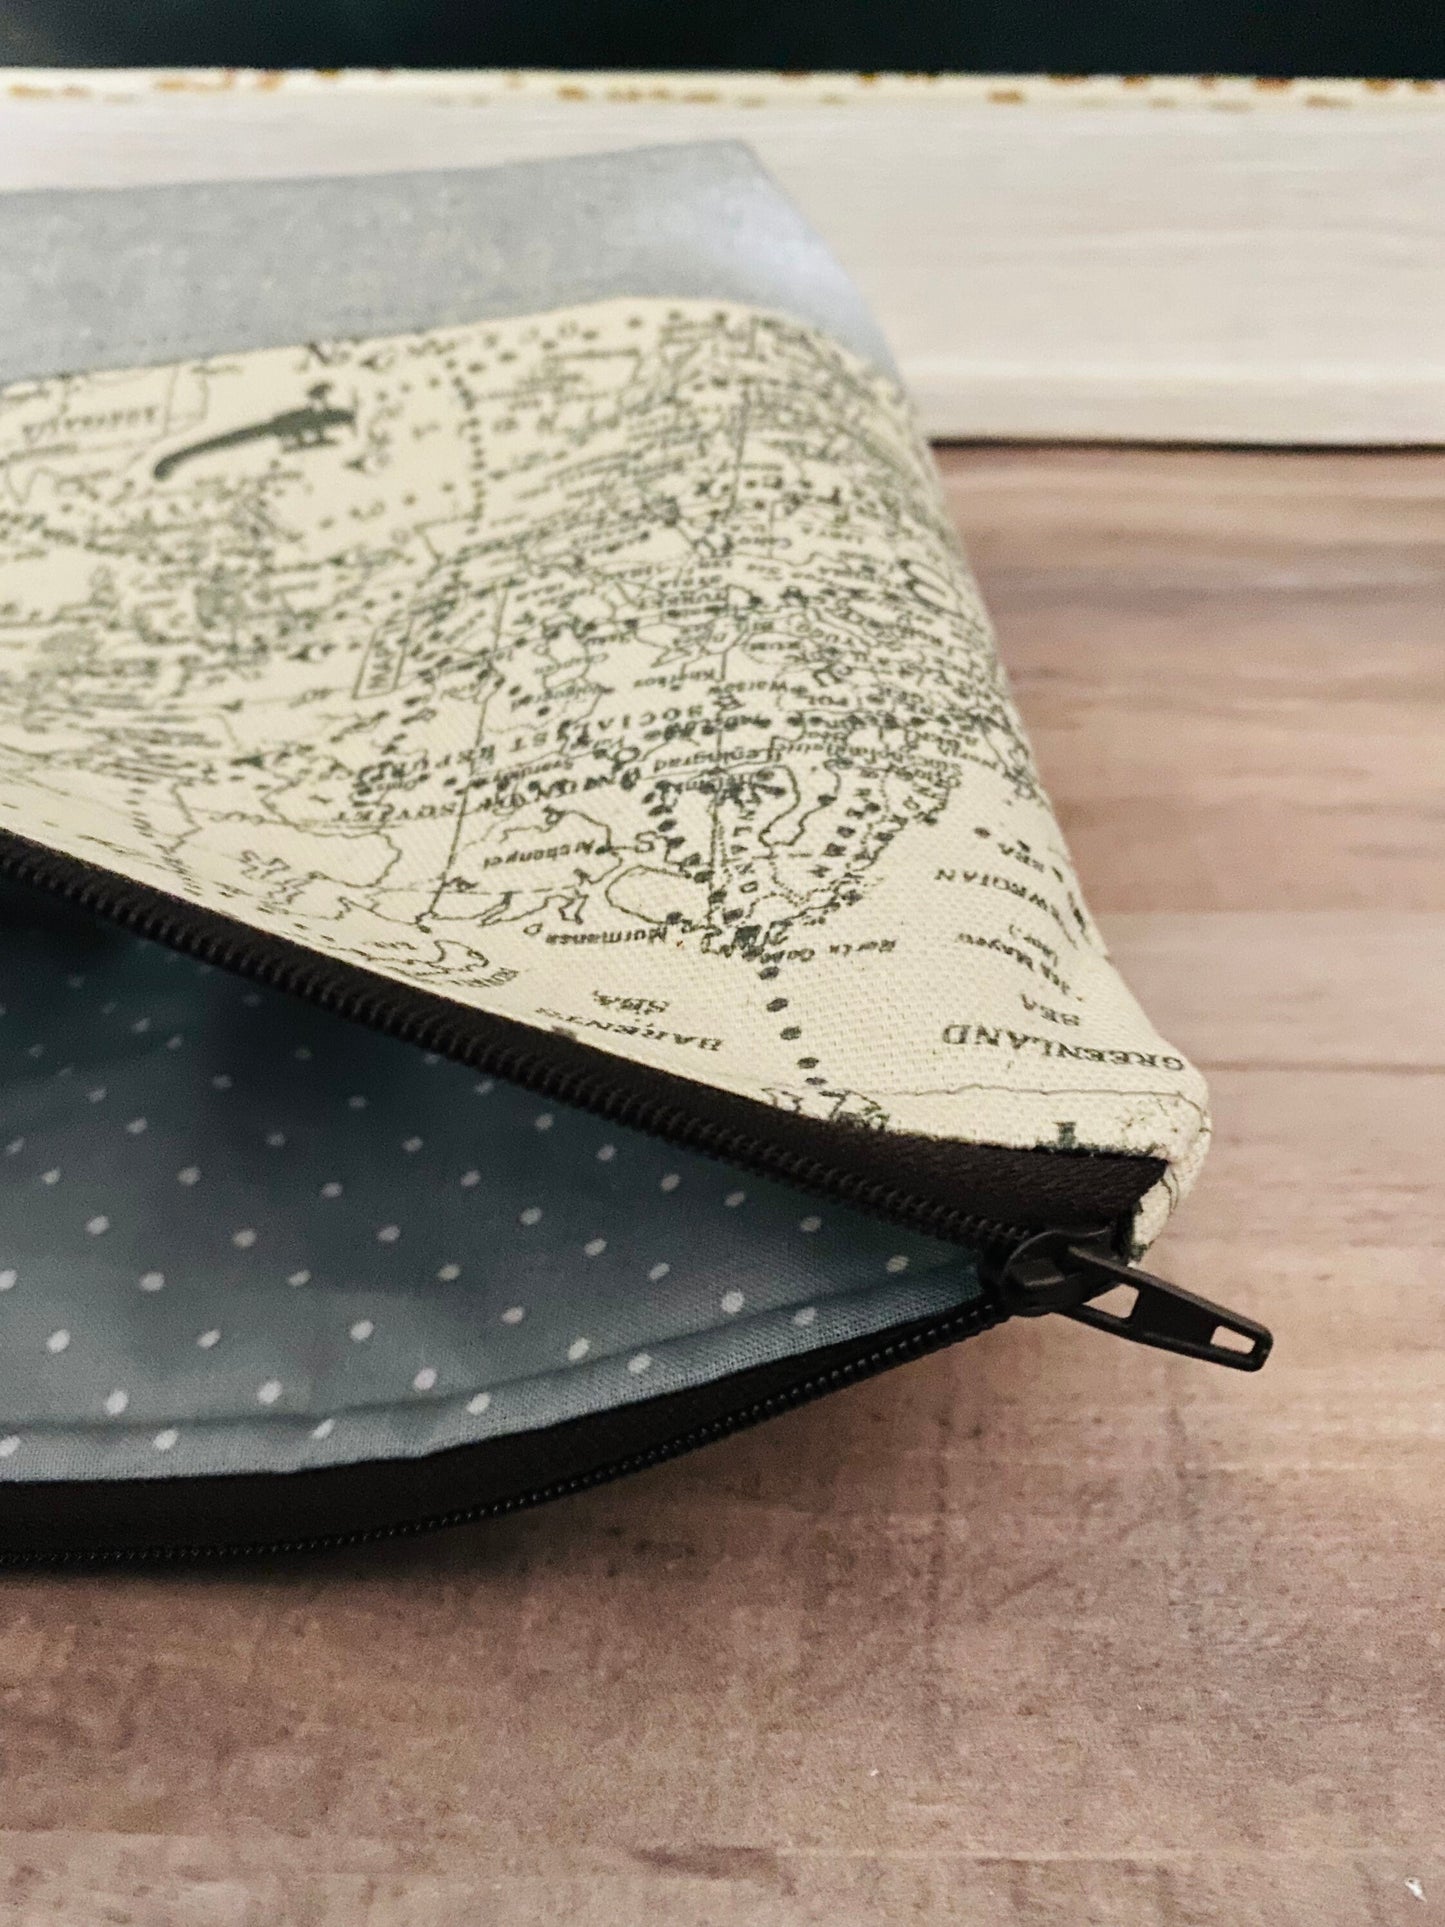 Antique Maps Large Zippered Bag